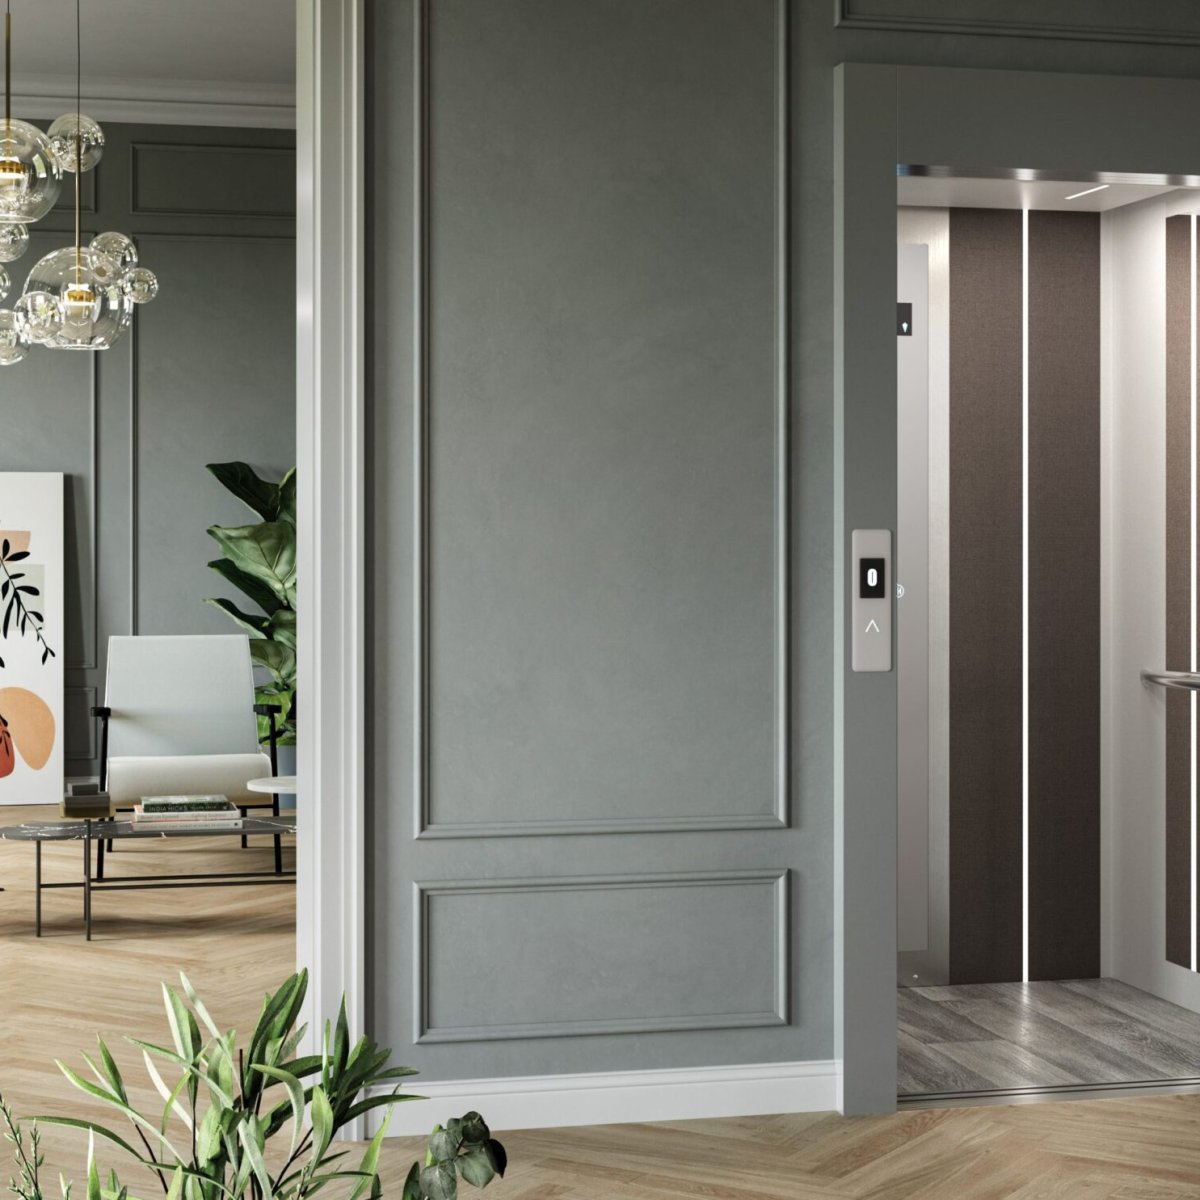  The Elite Home Lift | Simplex Elevators Gallery Image 1